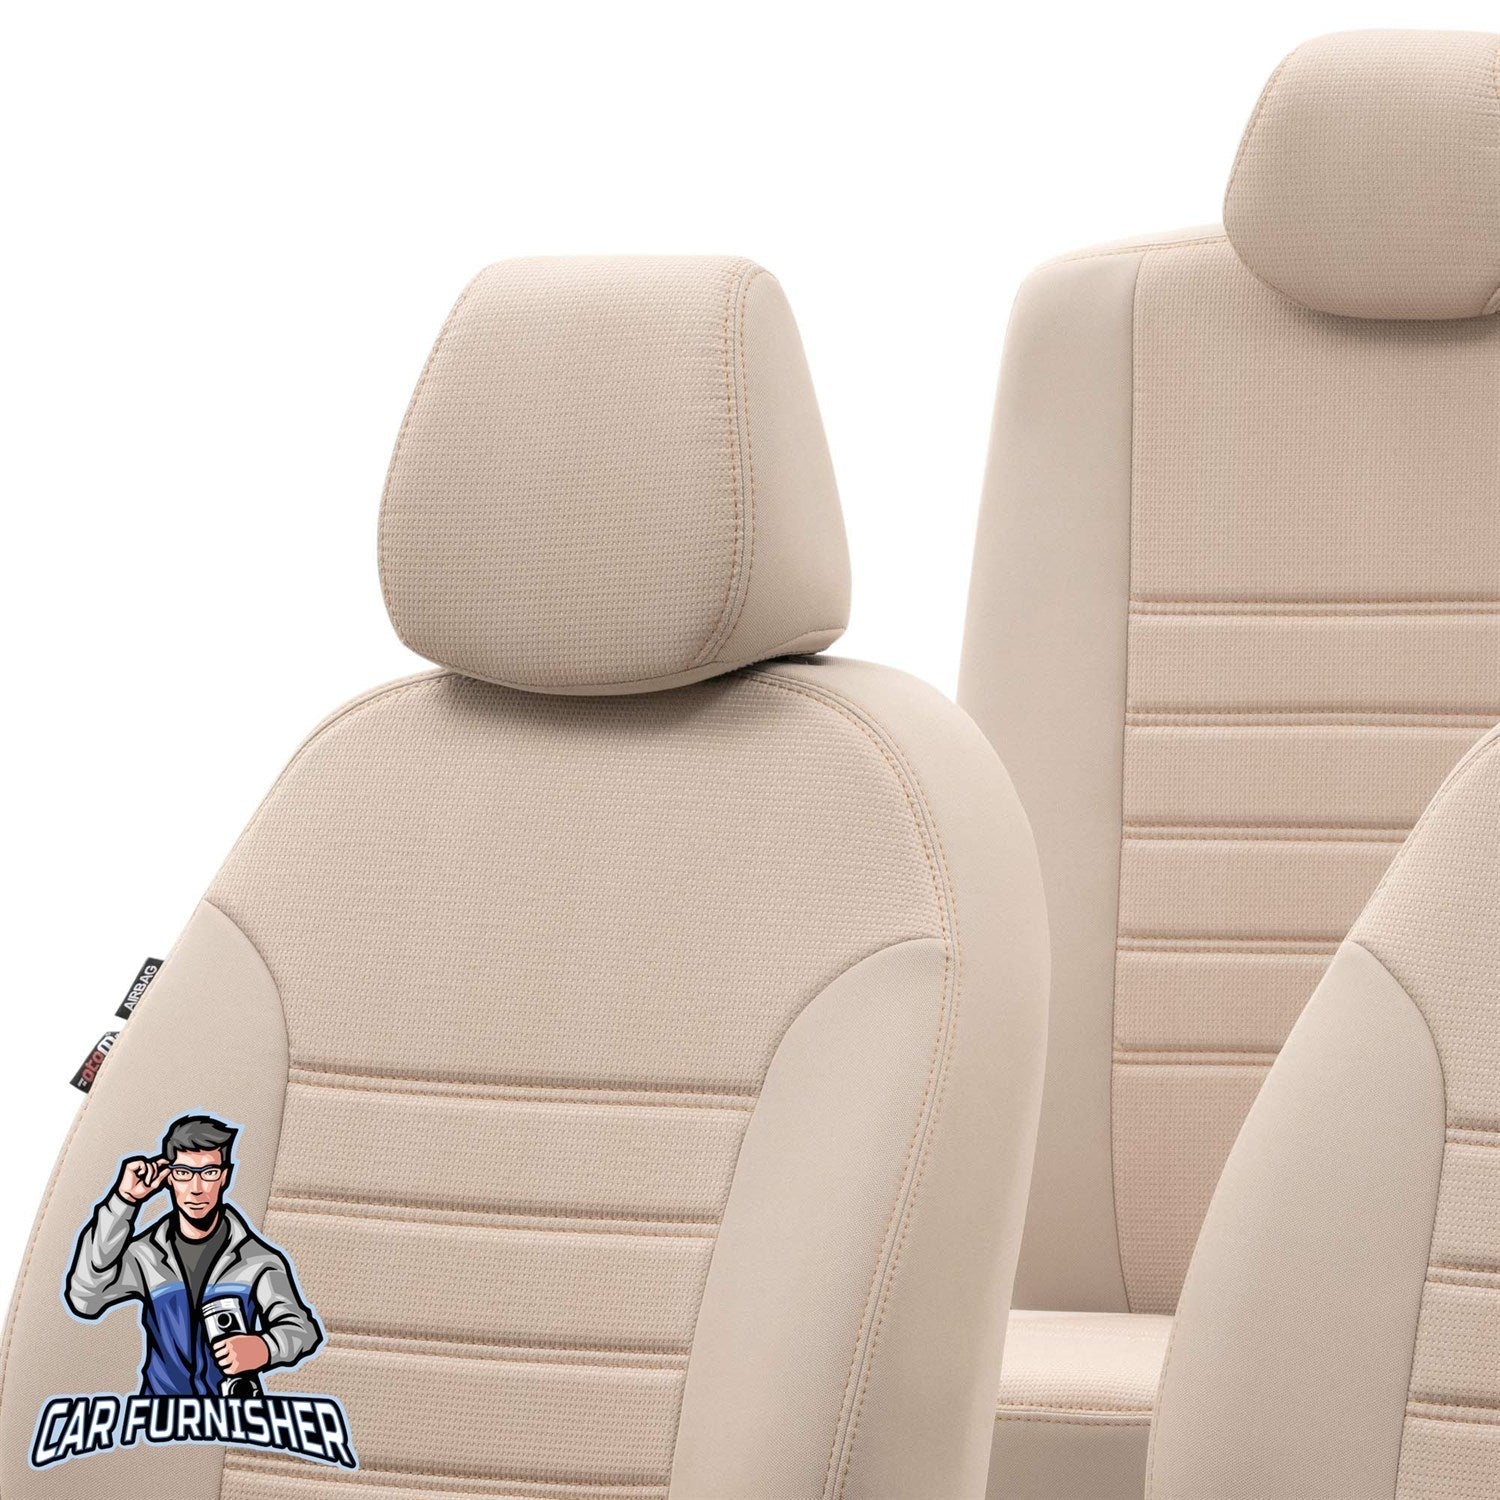 Iveco Stralis Seat Cover Original Jacquard Design Beige Front Seats (2 Seats + Handrest + Headrests) Jacquard Fabric